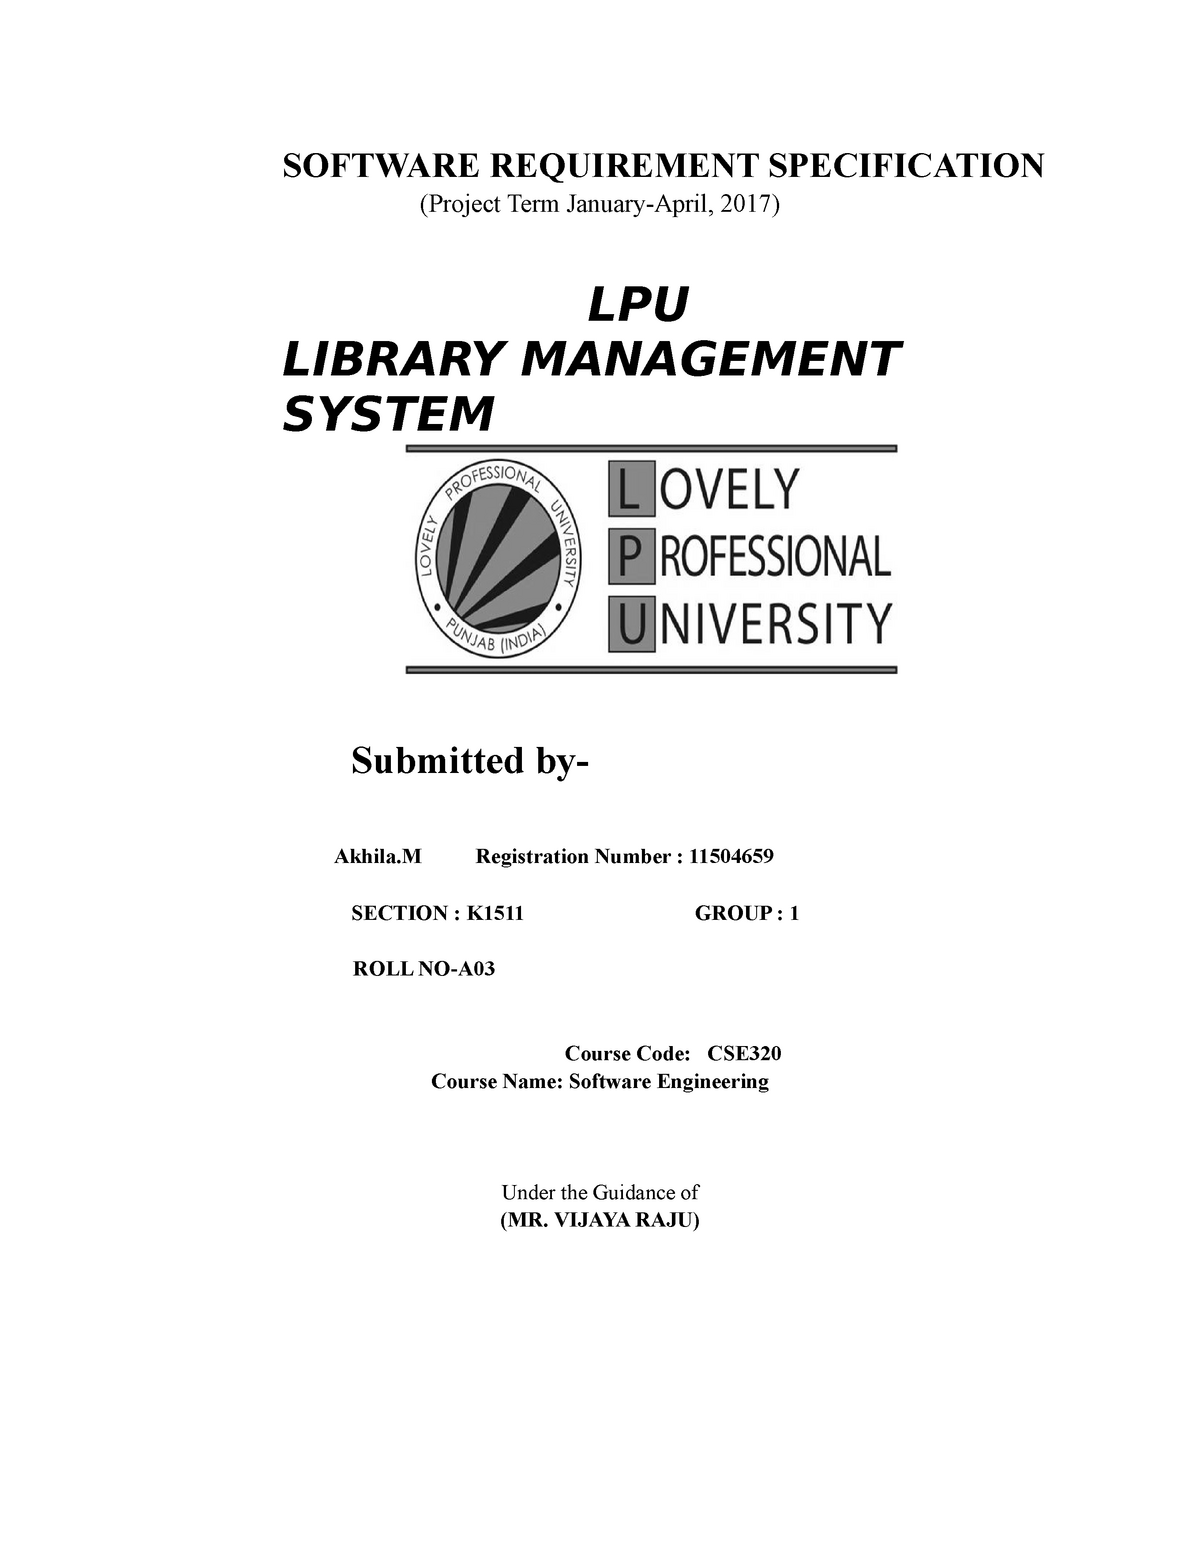 lpu university management system - SOFTWARE REQUIREMENT SPECIFICATION ...